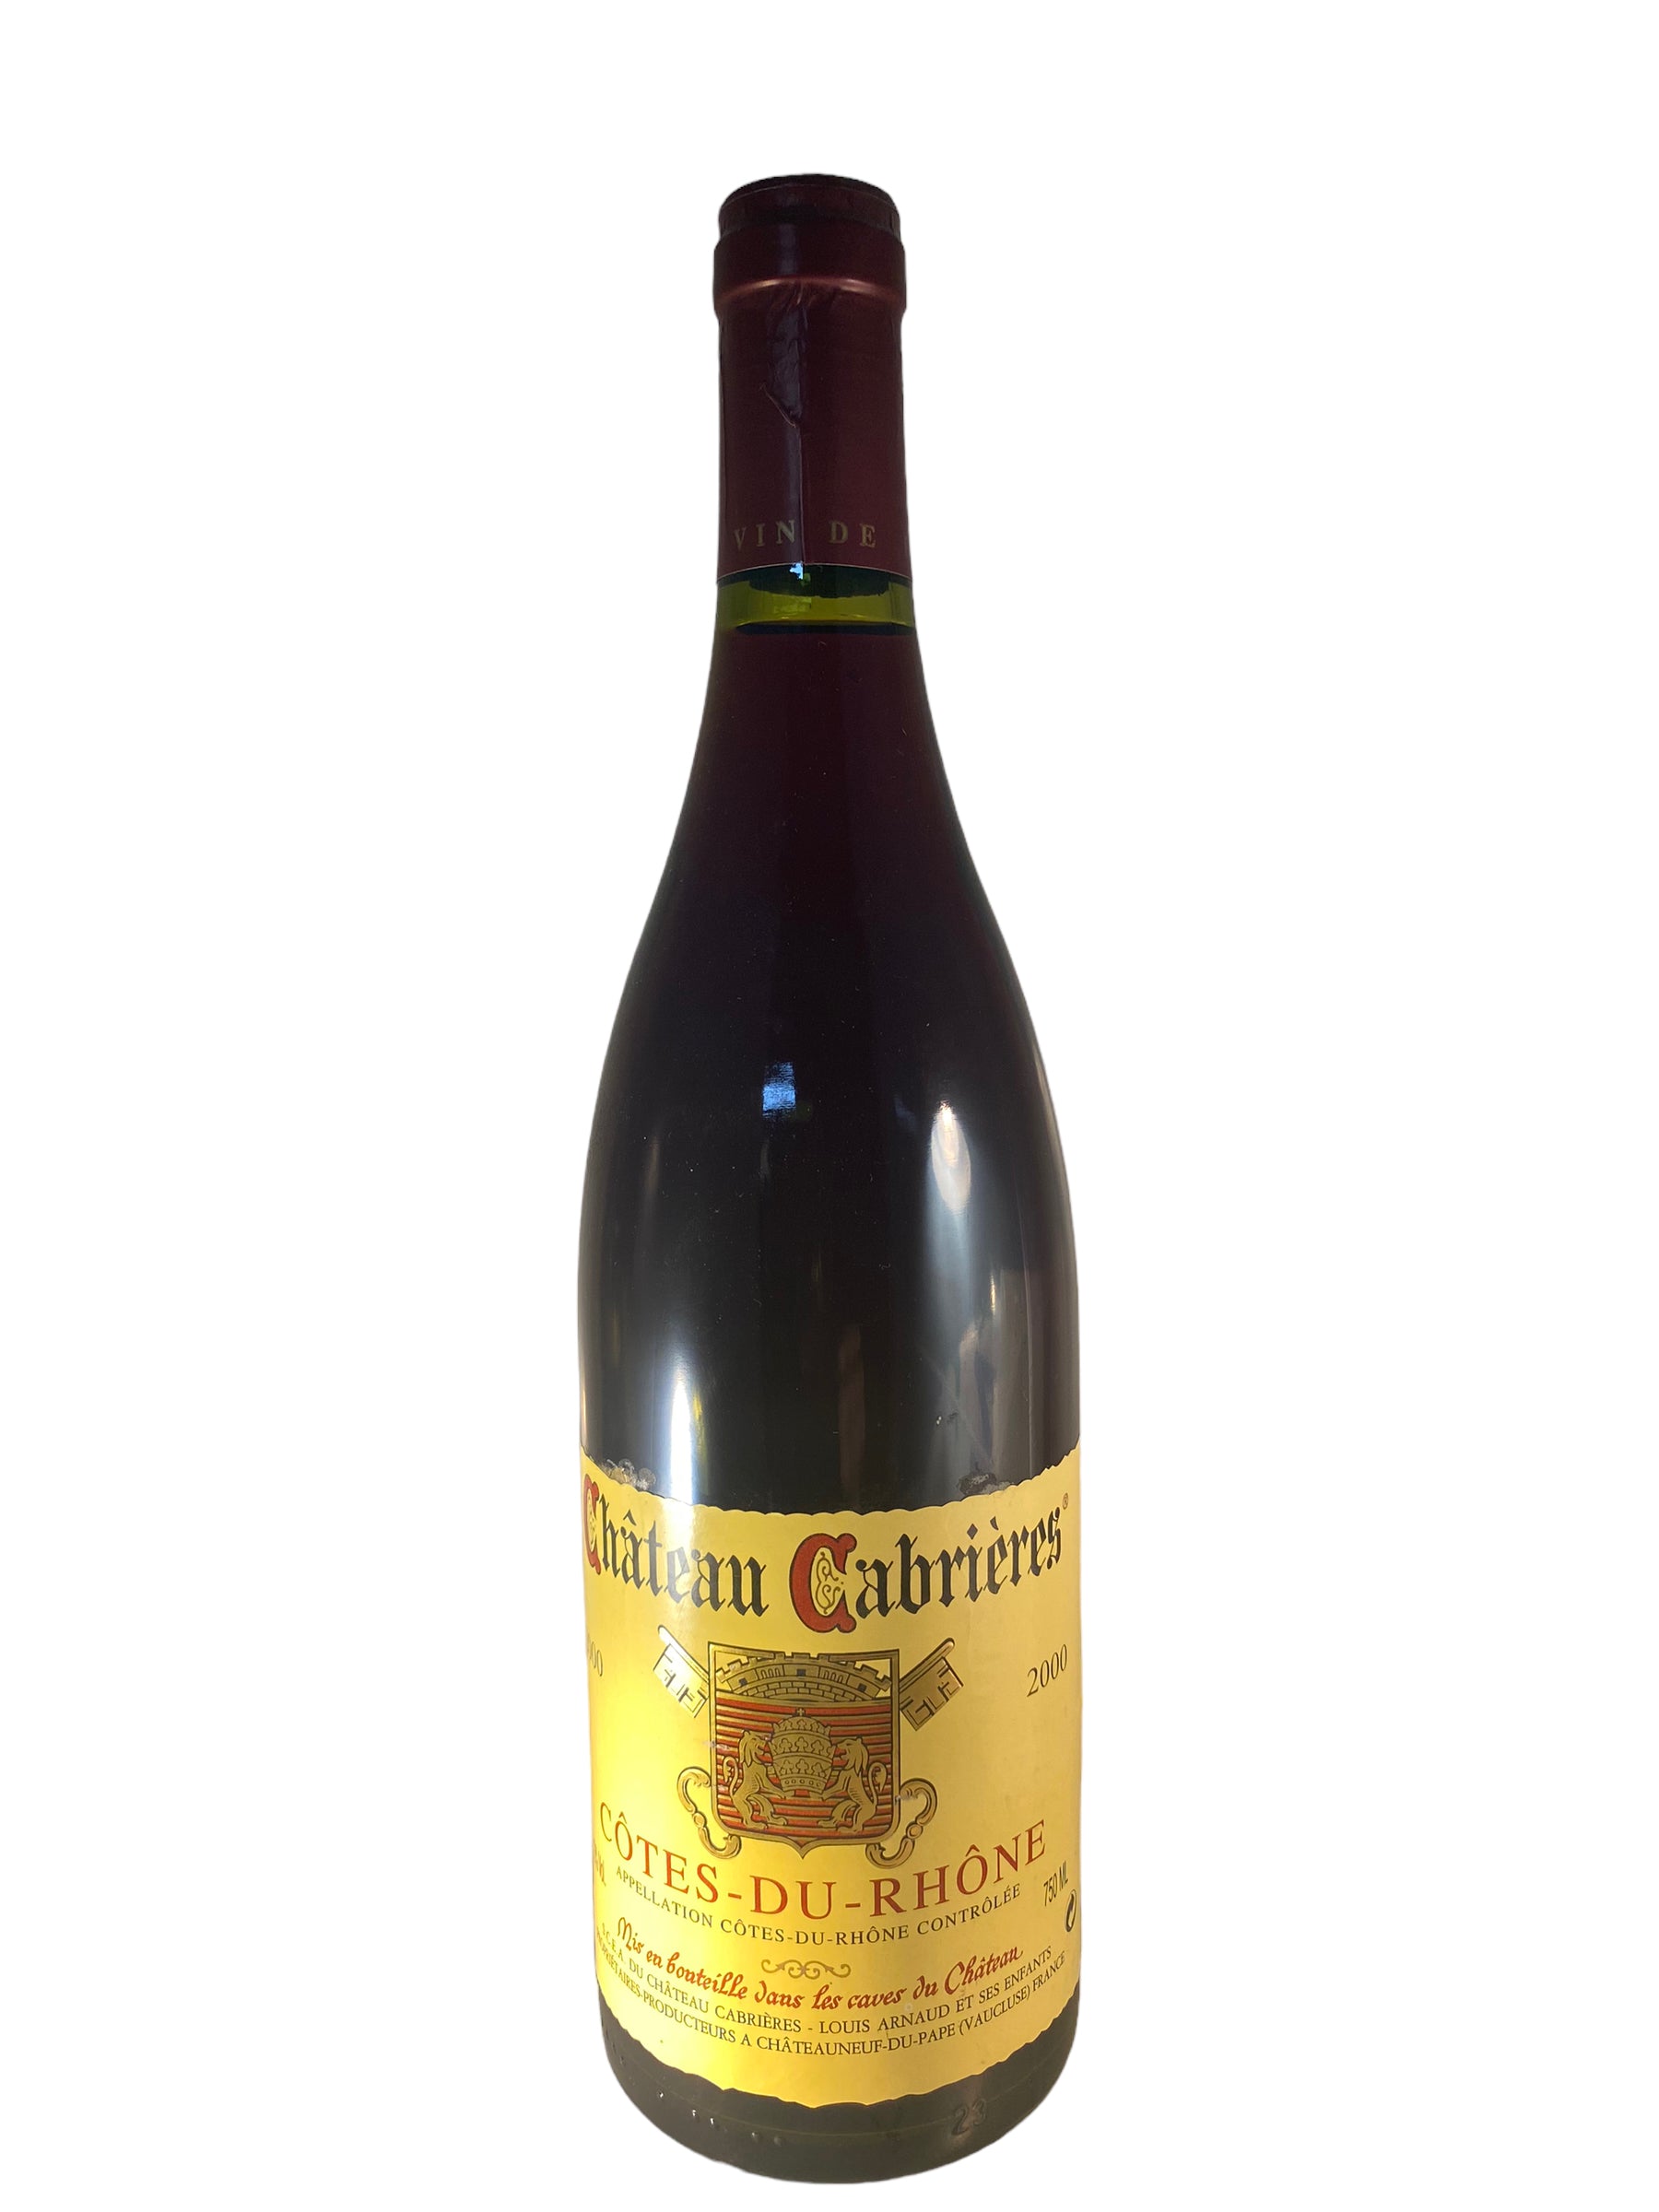 Se Cotes Du Rhone 2000 Chateau Cabrieres hos Bottleswithhistory.dk